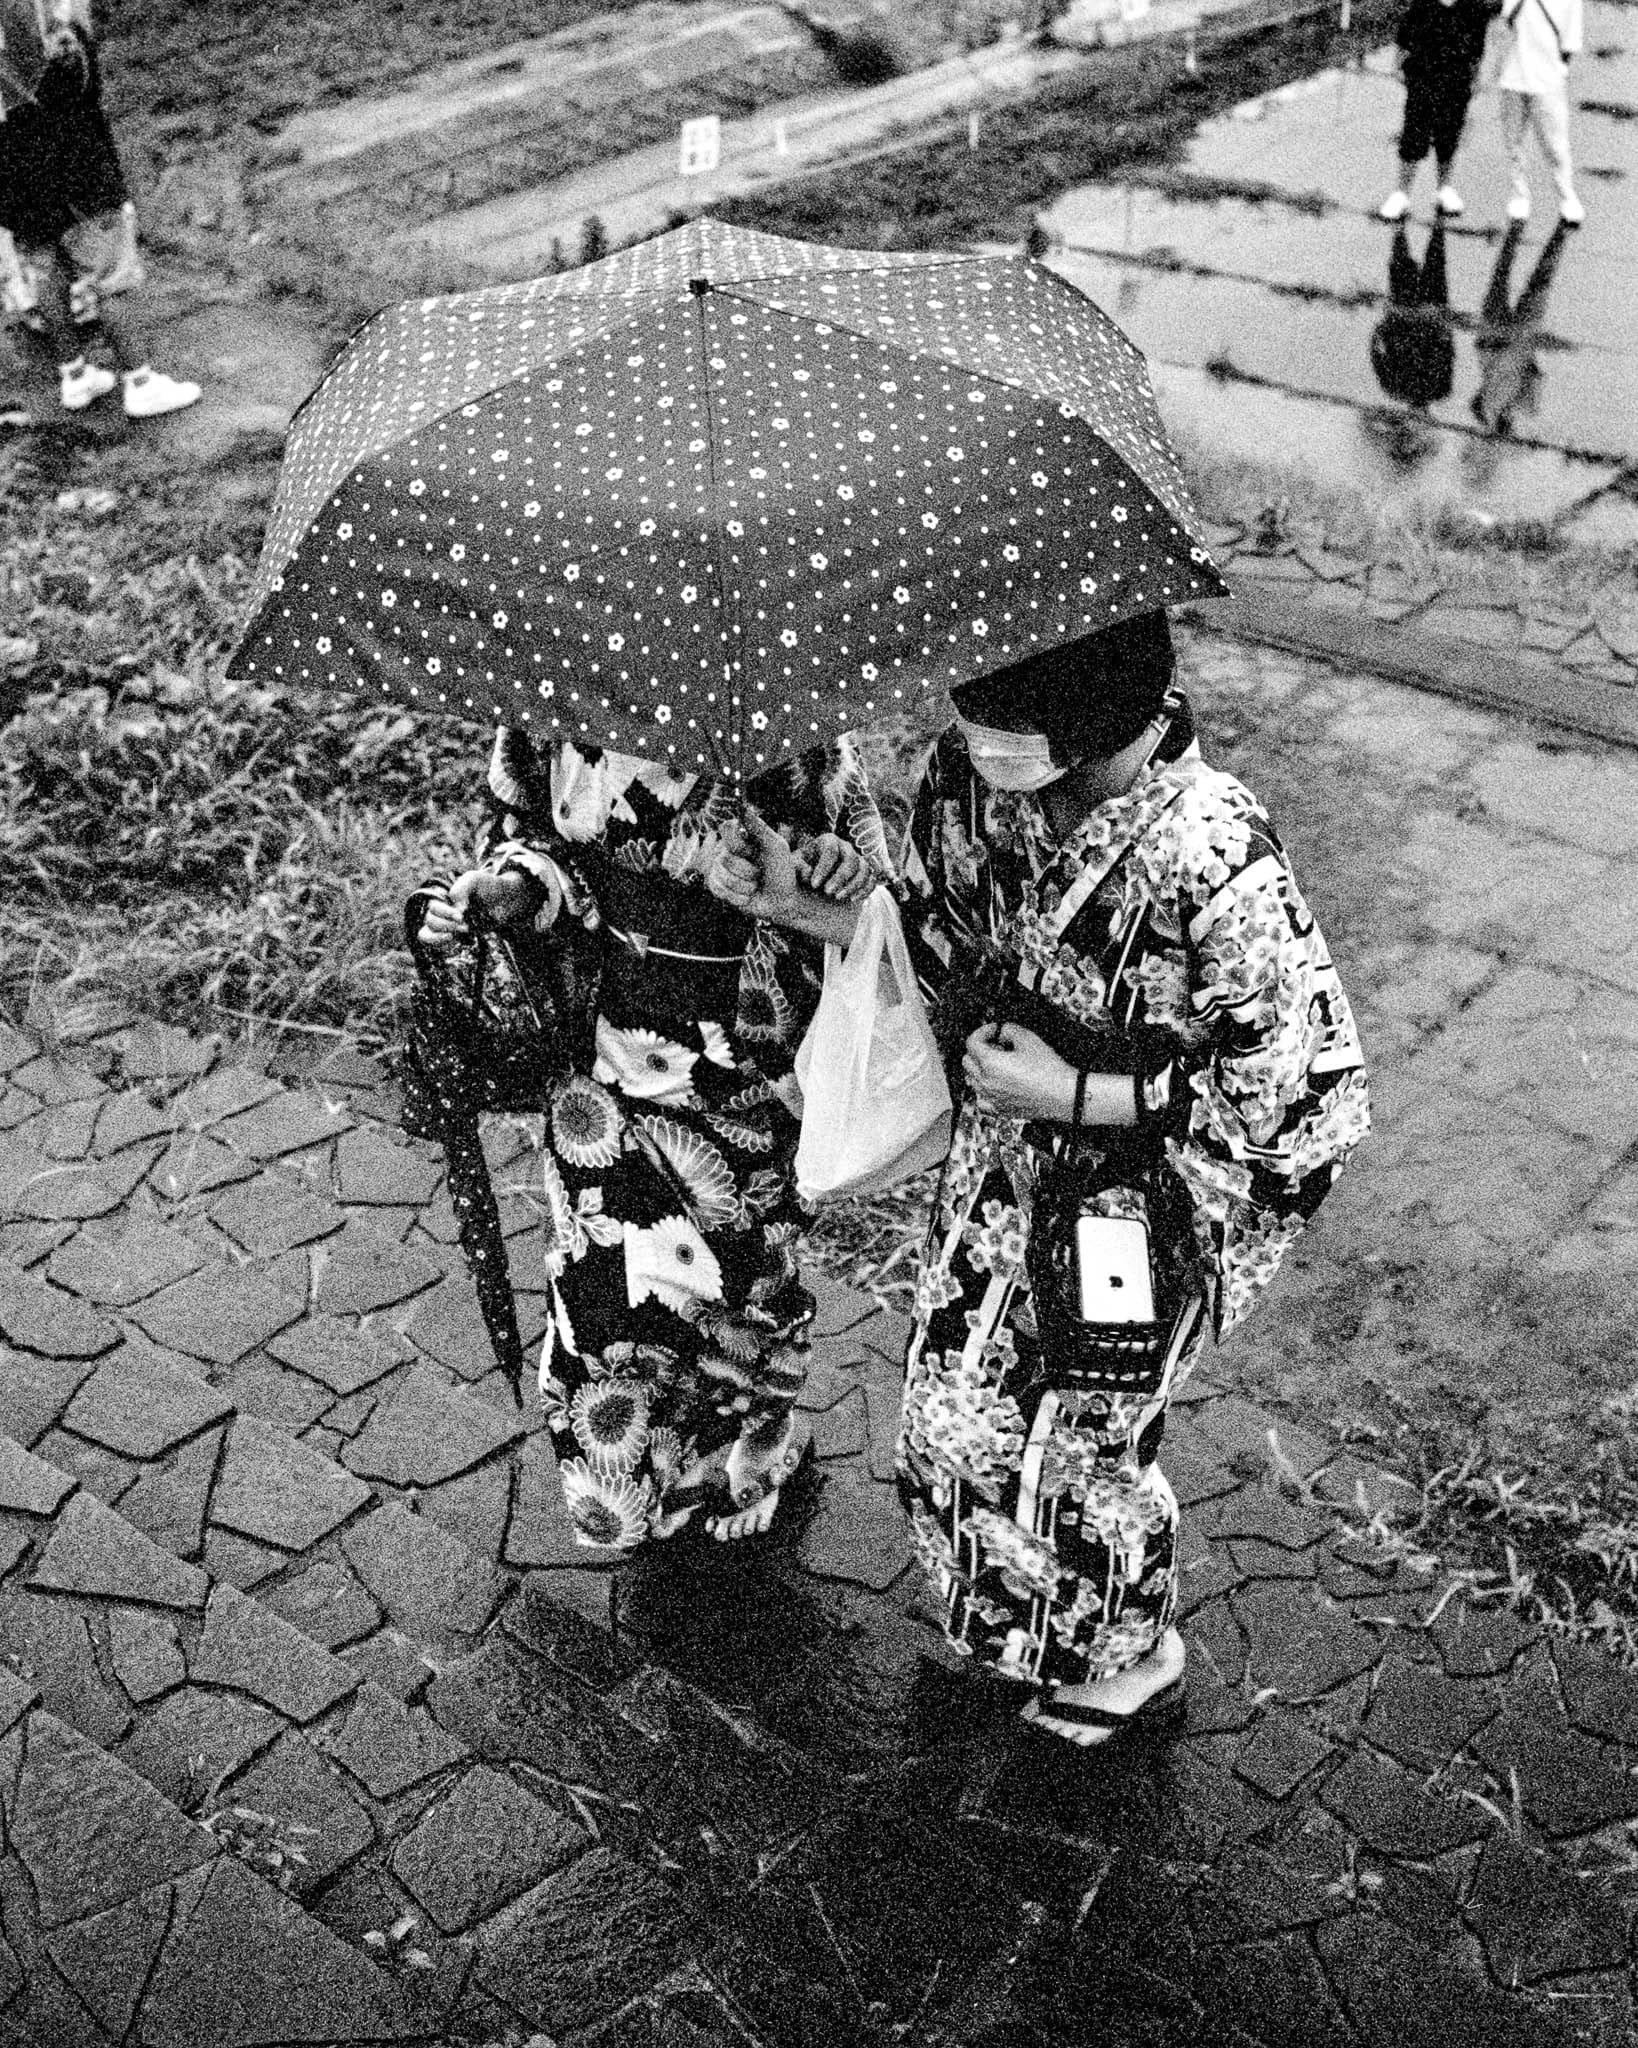 B&W film photo image, taken in Iwaki City, Fukushima, Japan, captures two young women clad in traditional Japanese yukata huddled under a shared umbrella